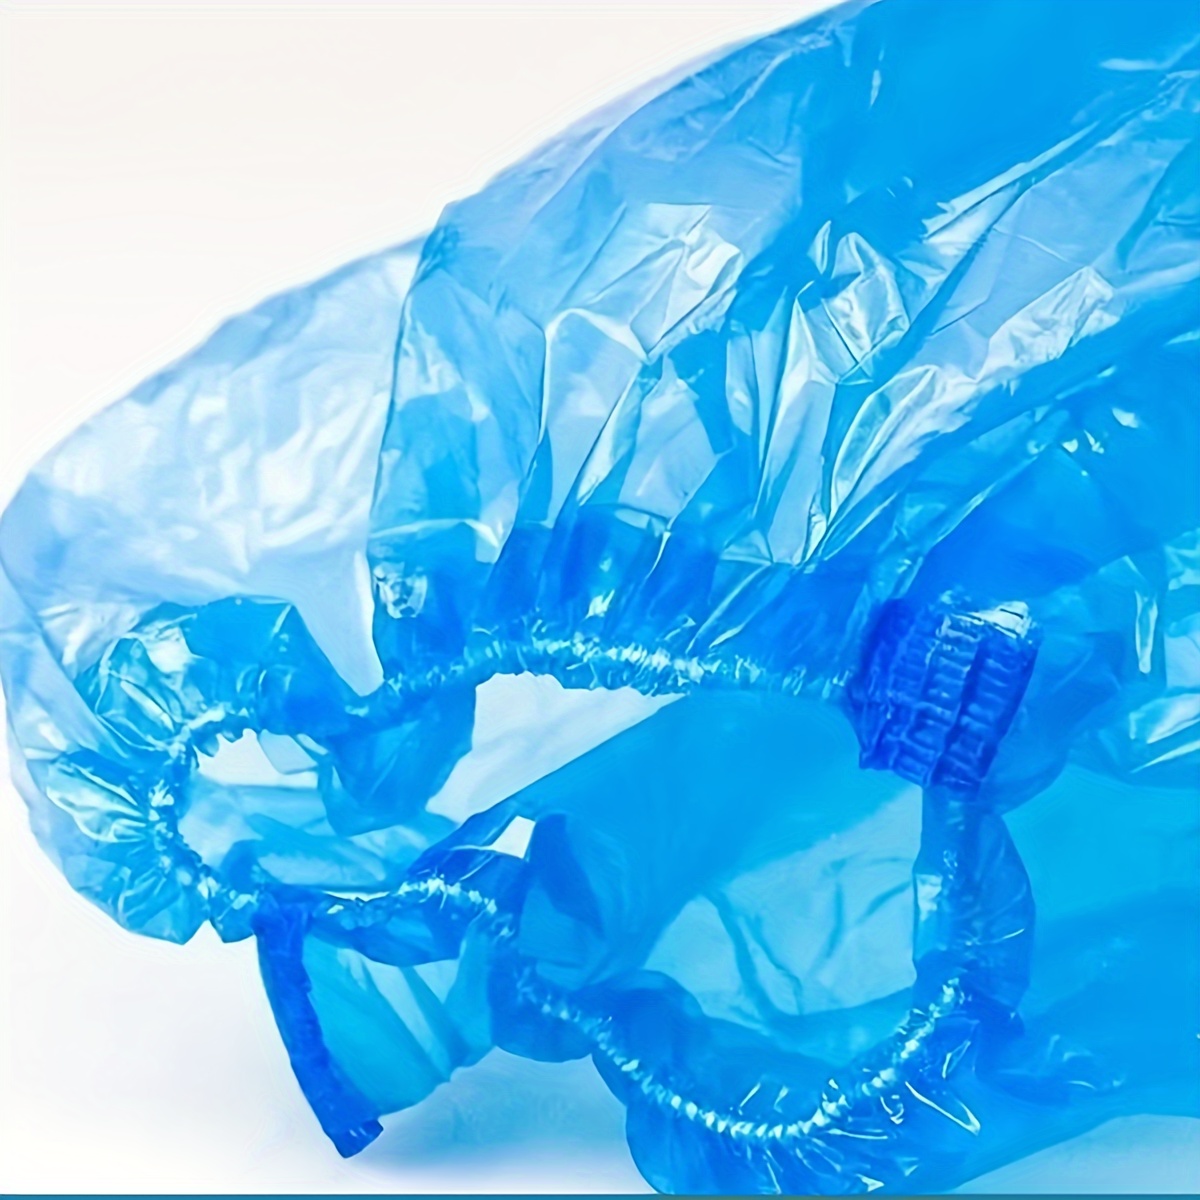 Transparent Plastic Sleeves